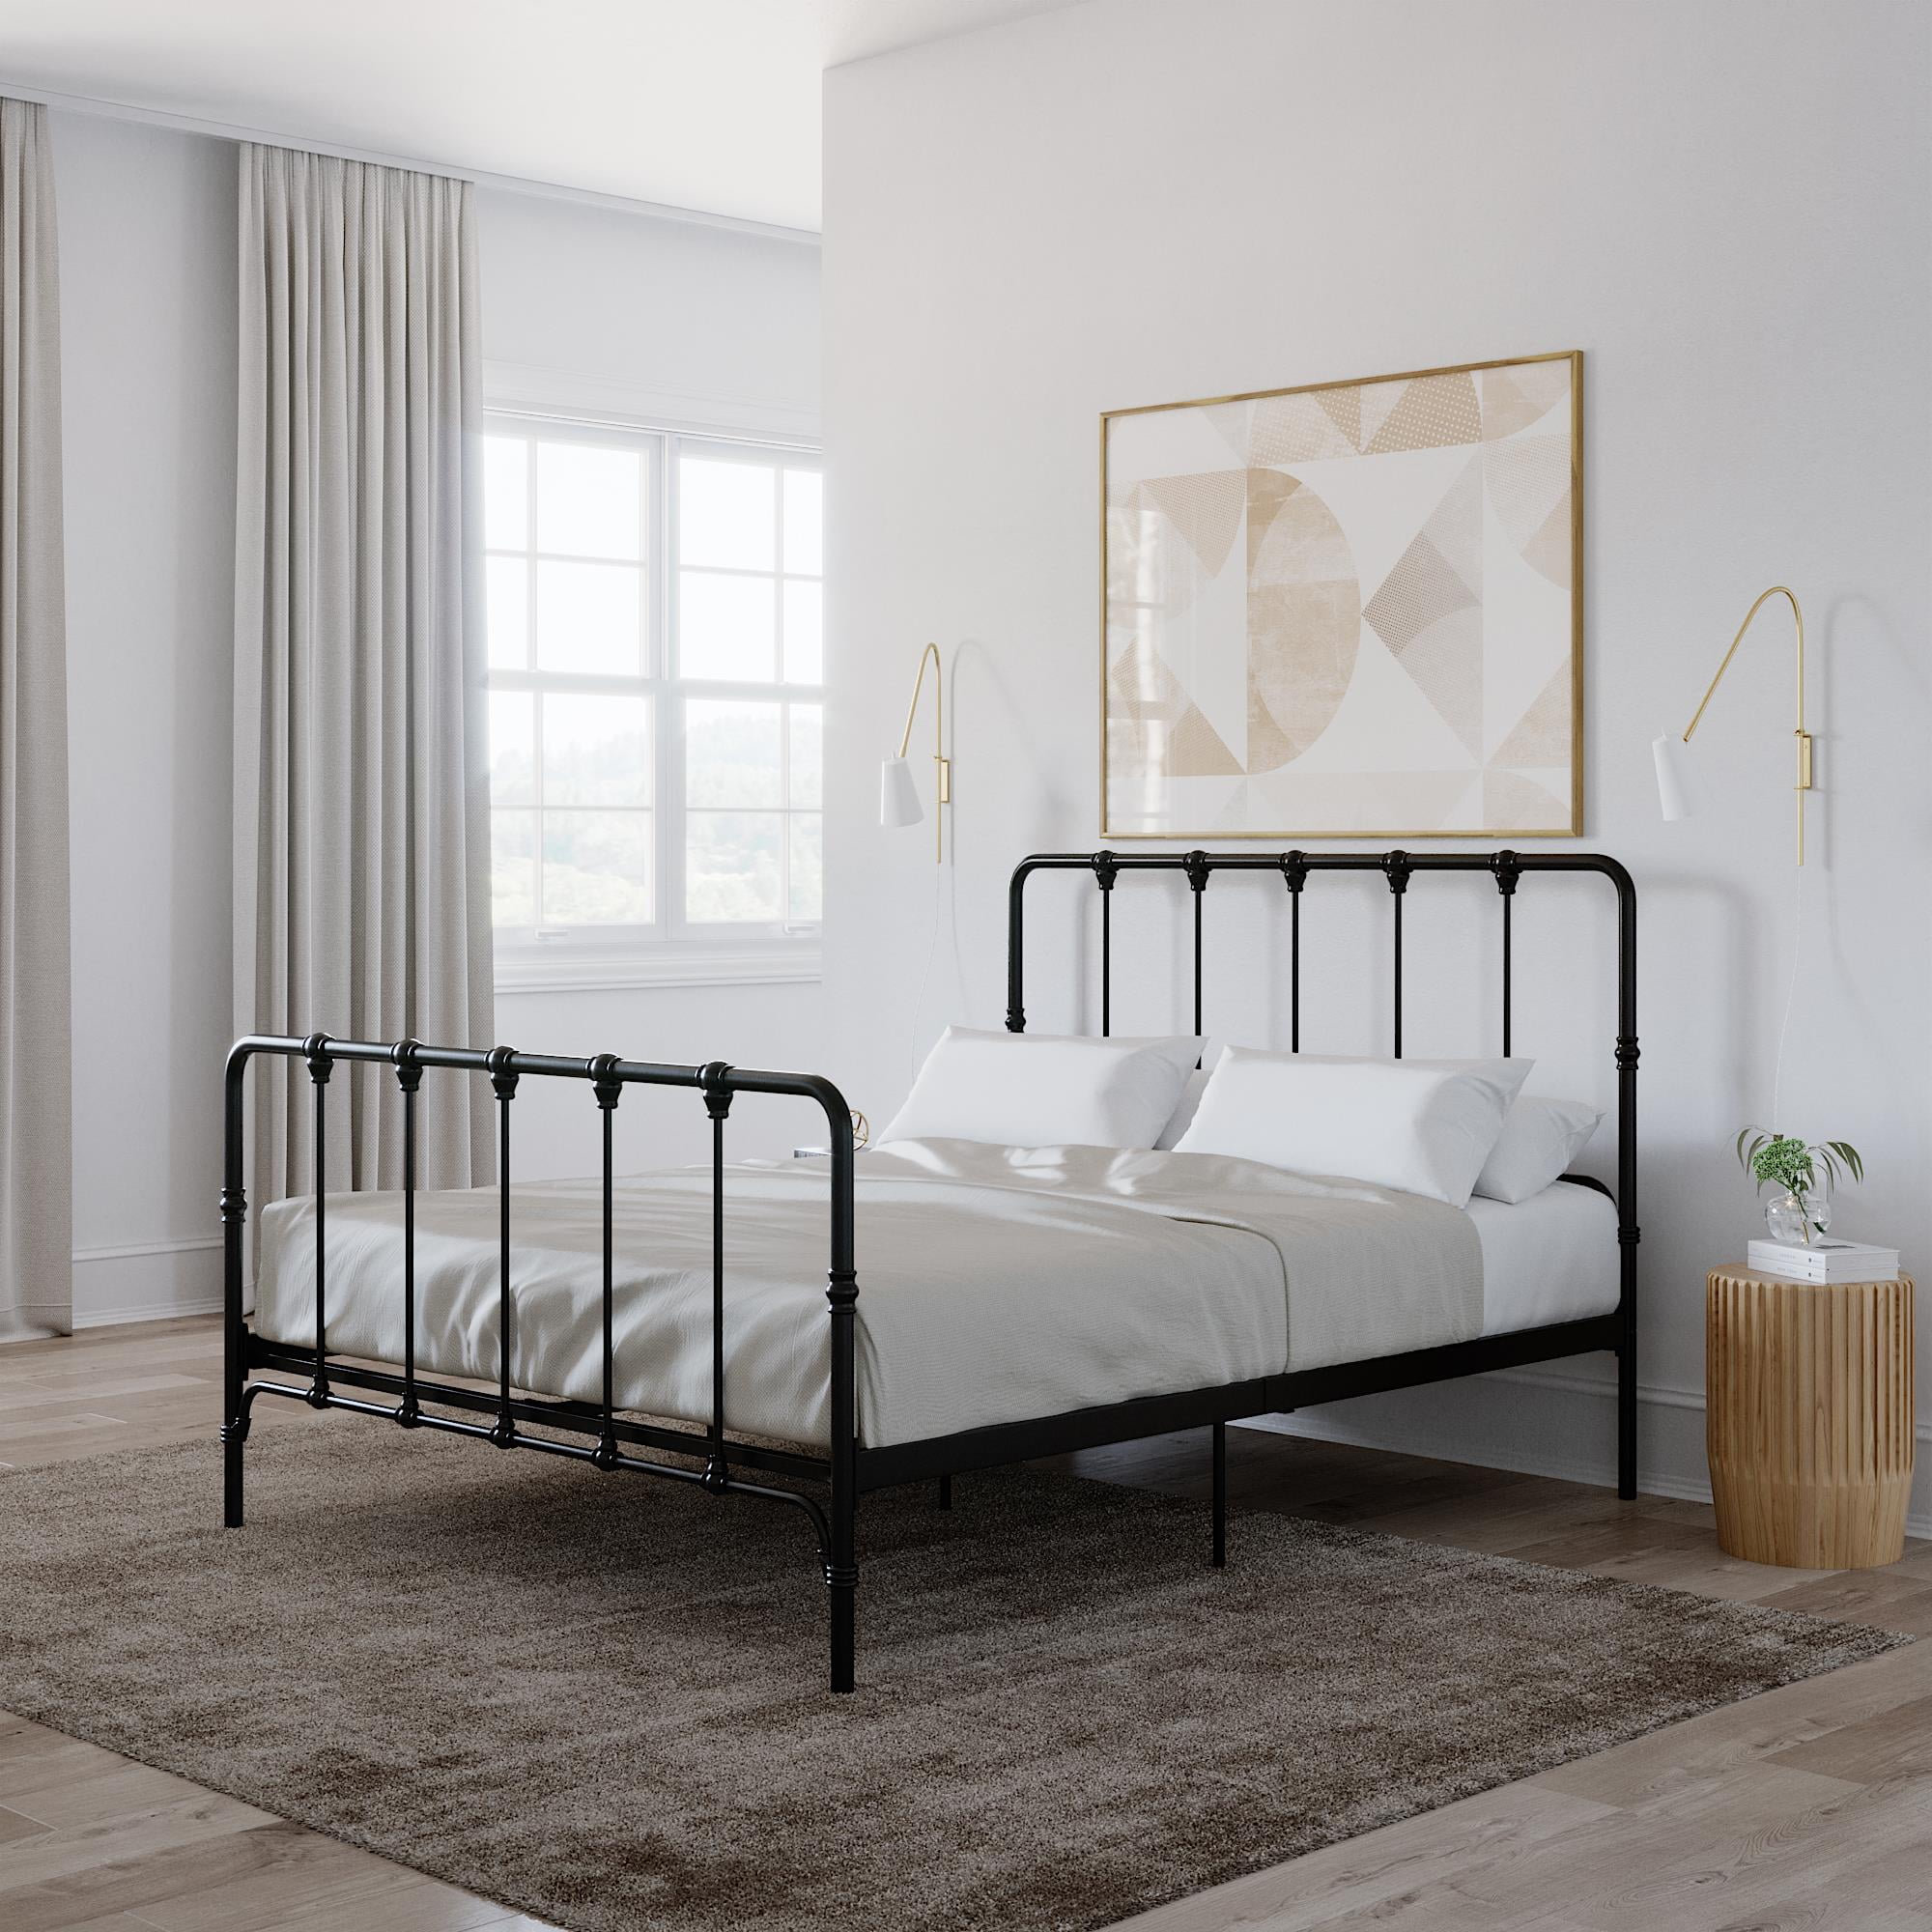 EN. Casa Metal Bed 90x200 with MATTRESS Black Bed Frame Design Bed Metal 